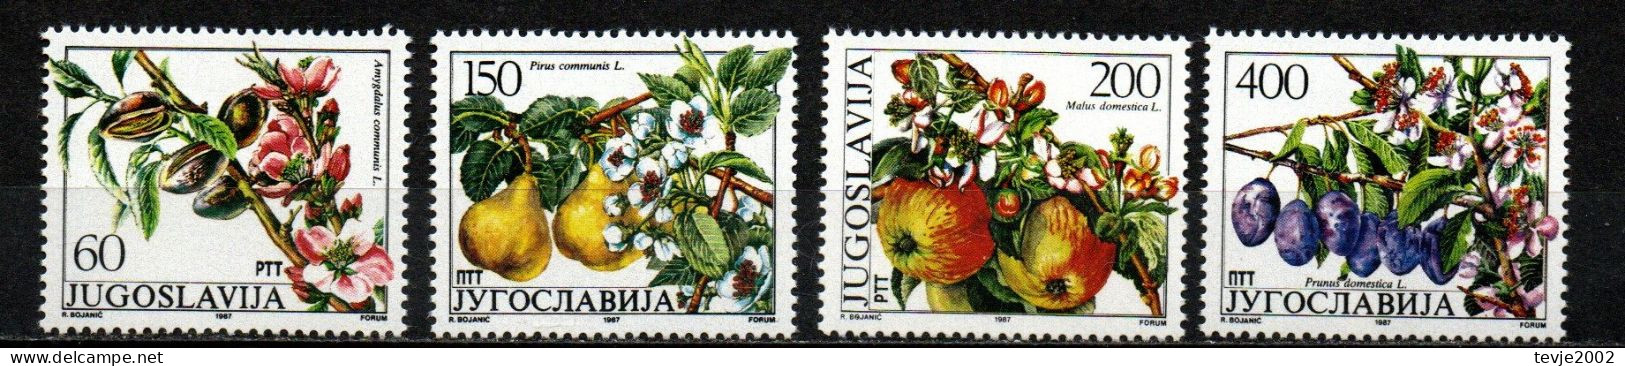 Jugoslawien 1987 - Mi.Nr. 2221 - 2224 - Postfrisch MNH - Früchte Fruits Obst - Fruit